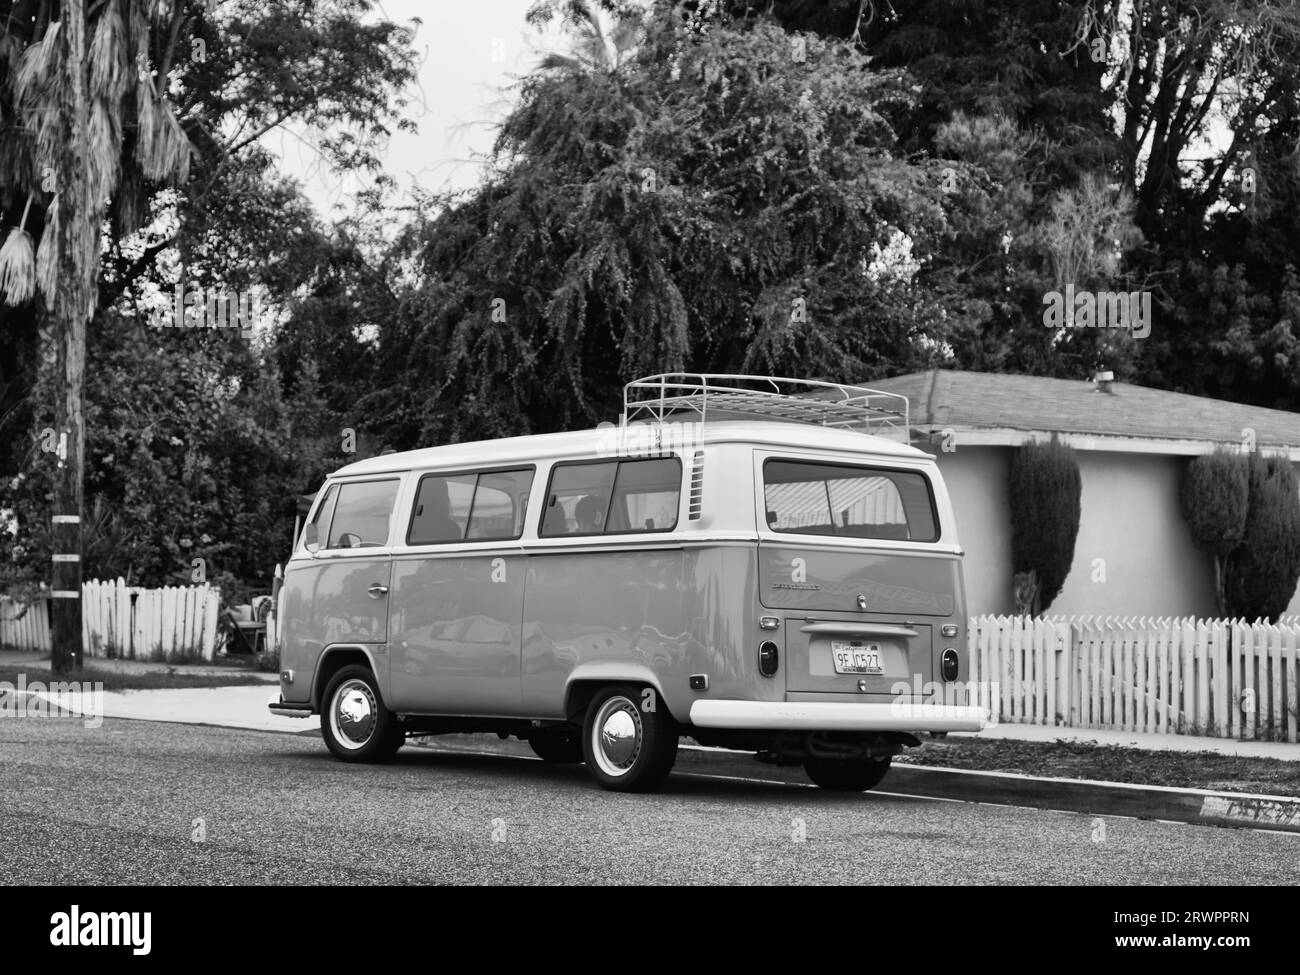 Vintage VW bus parked on suburban California residential street. Stock Photo